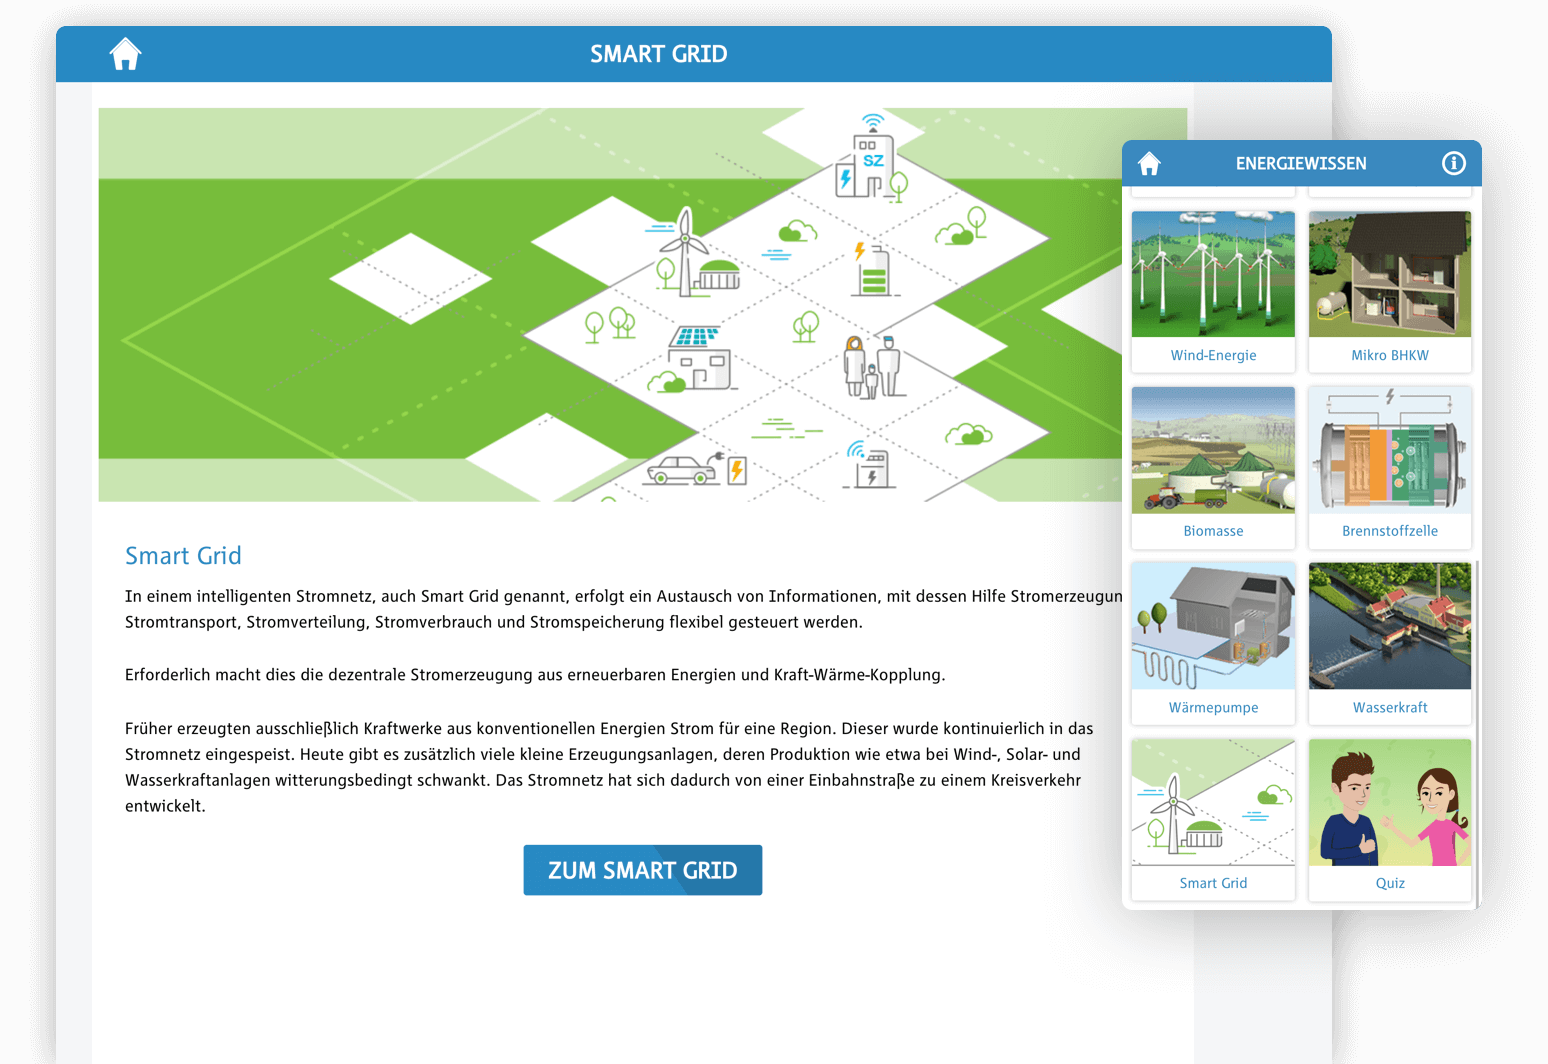 enviaM Energiewissen-App Header